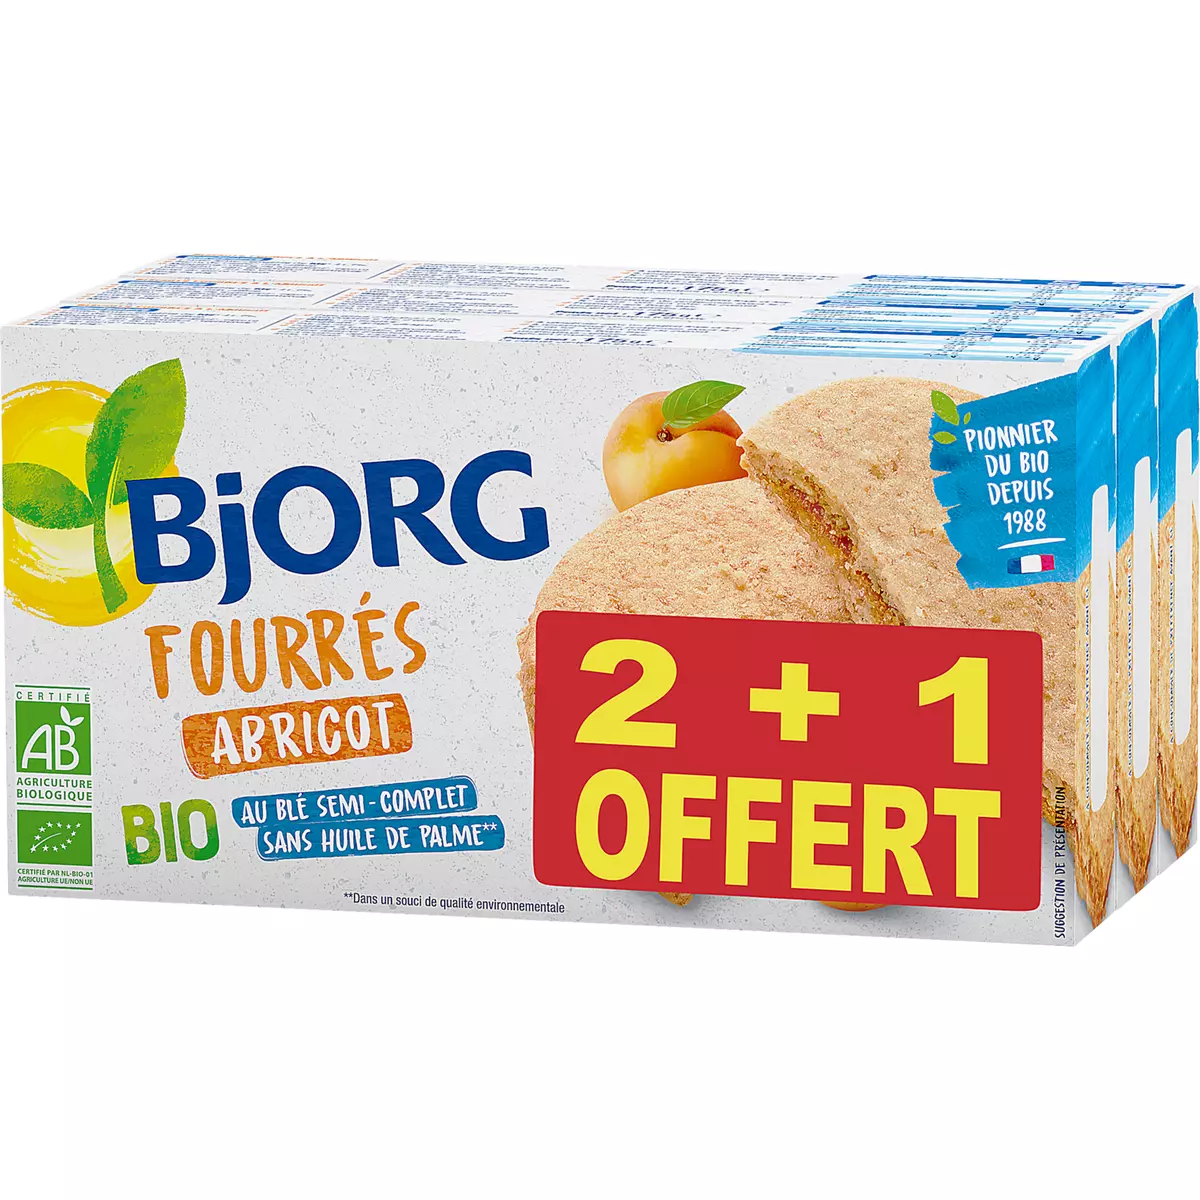 BJORG Fourrés abricot bio 2+1 offert 3x175g 525g